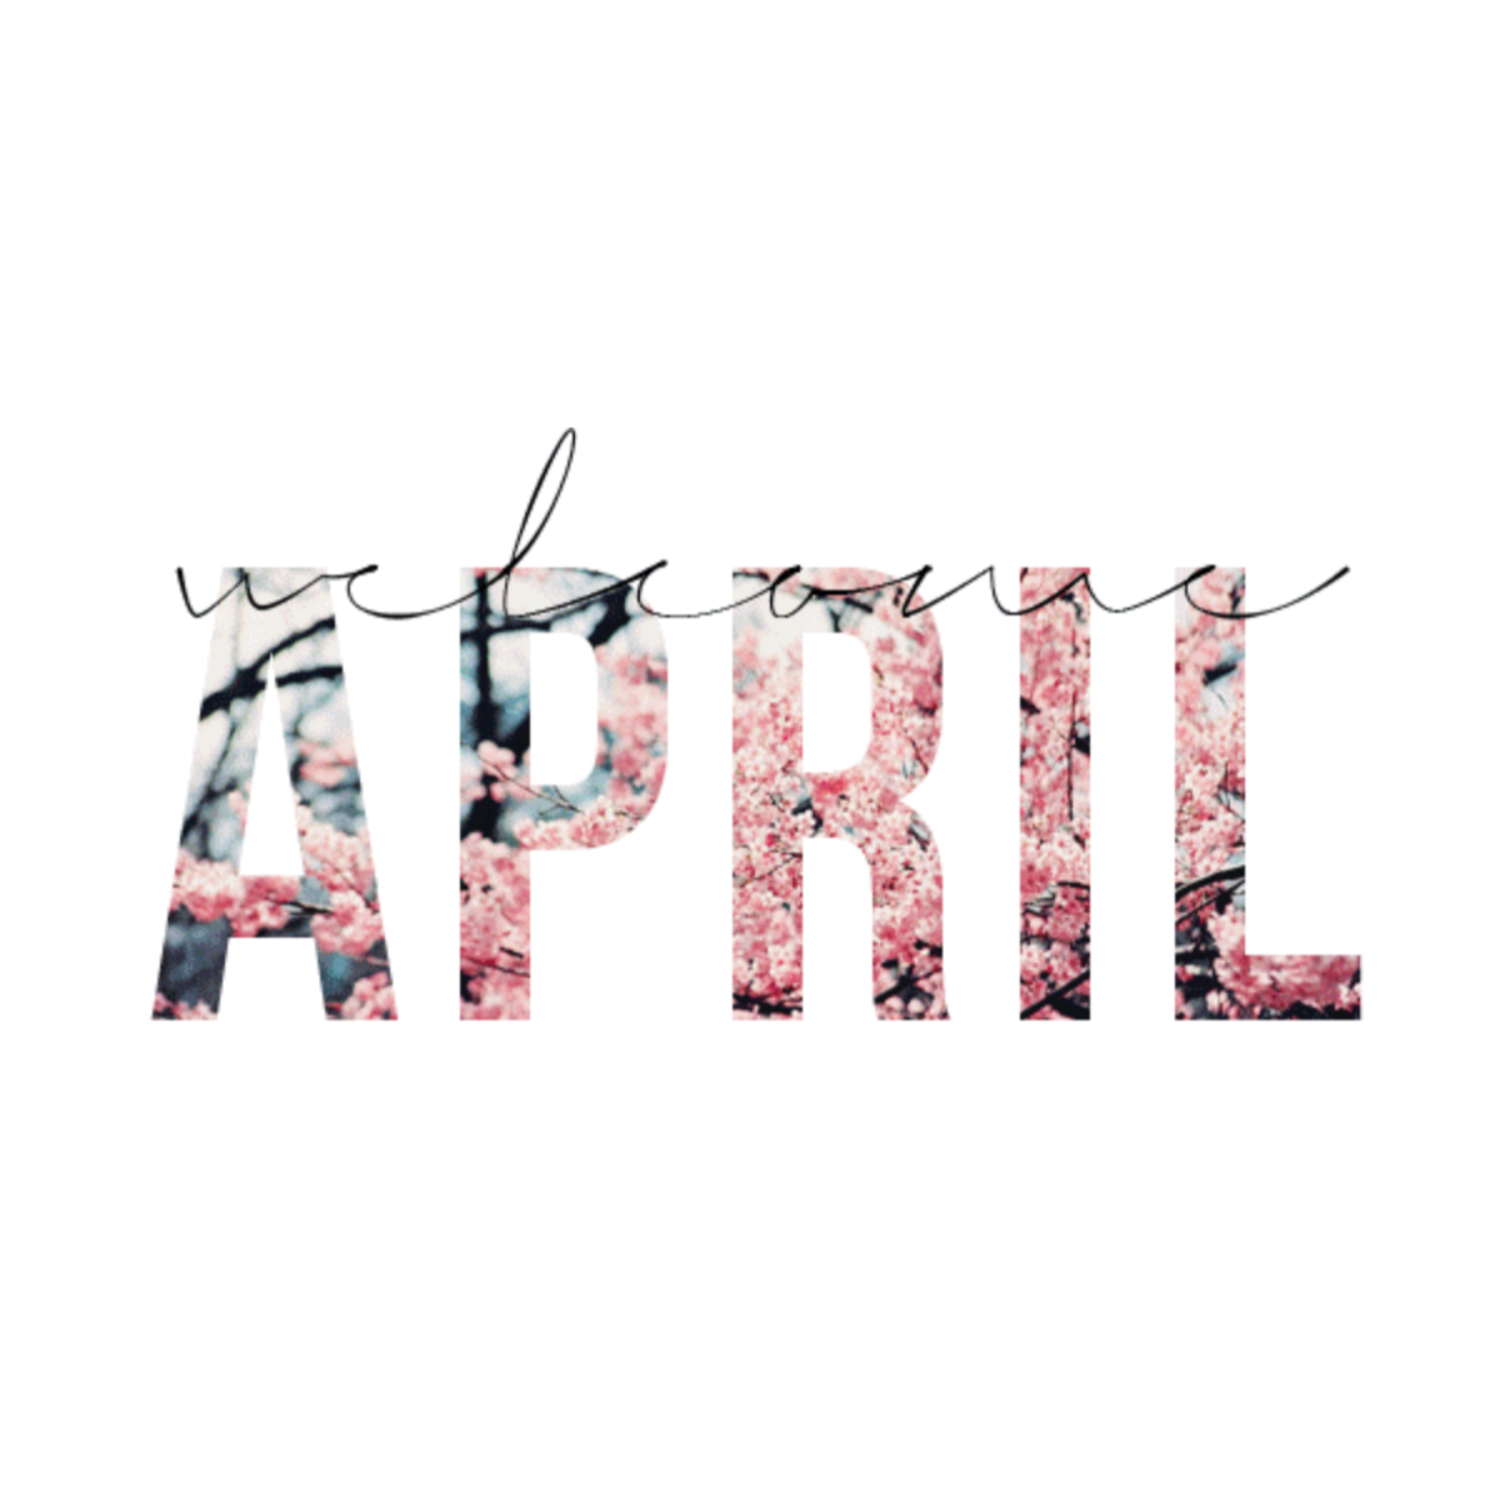 april freetoedit #april sticker by @keimyburgoa